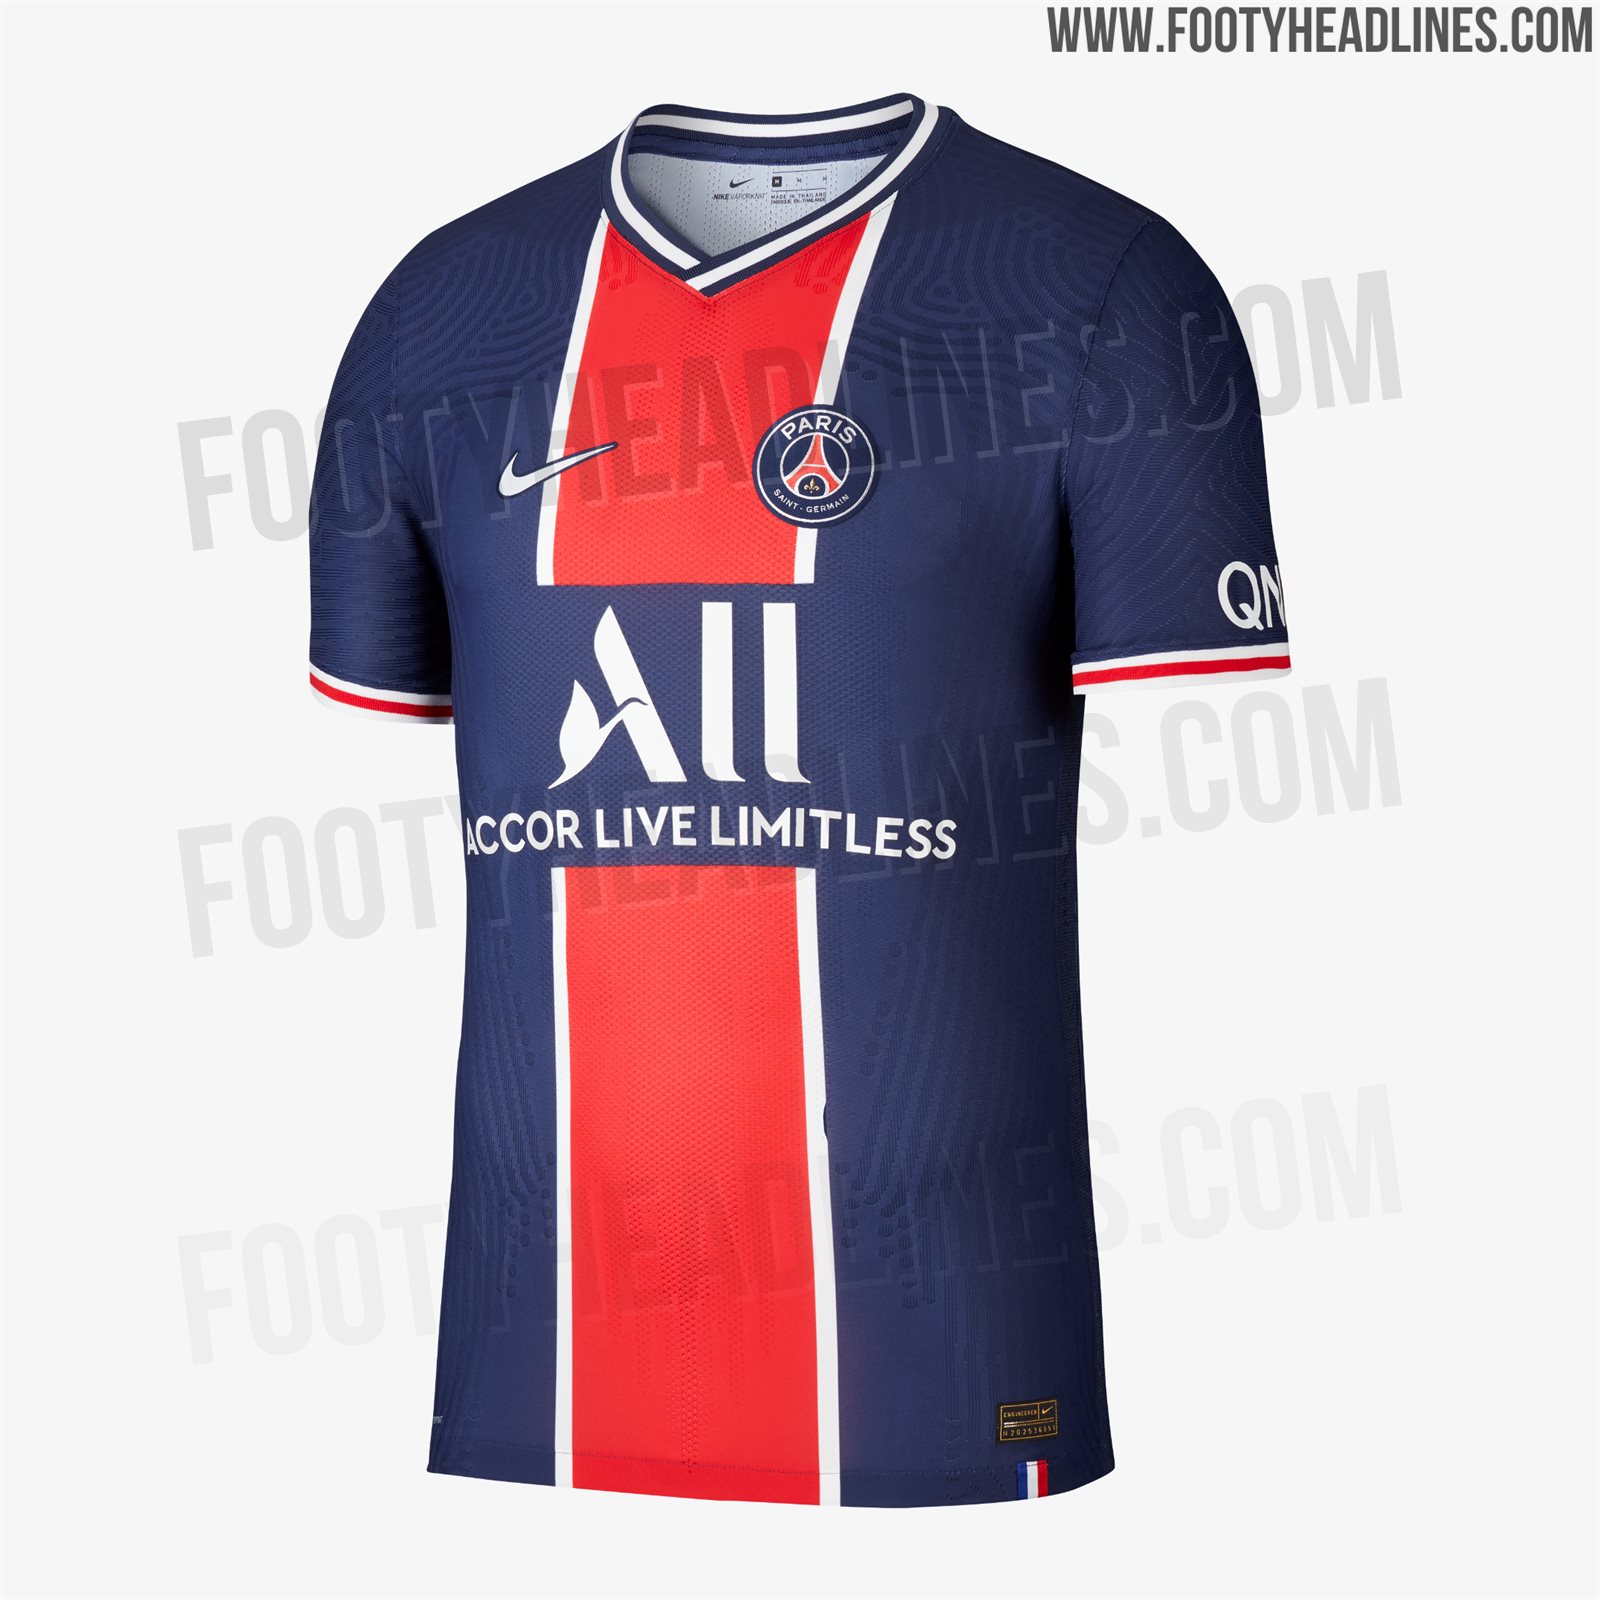 Paris Saint-Germain Third football shirt 2006 - 2007.